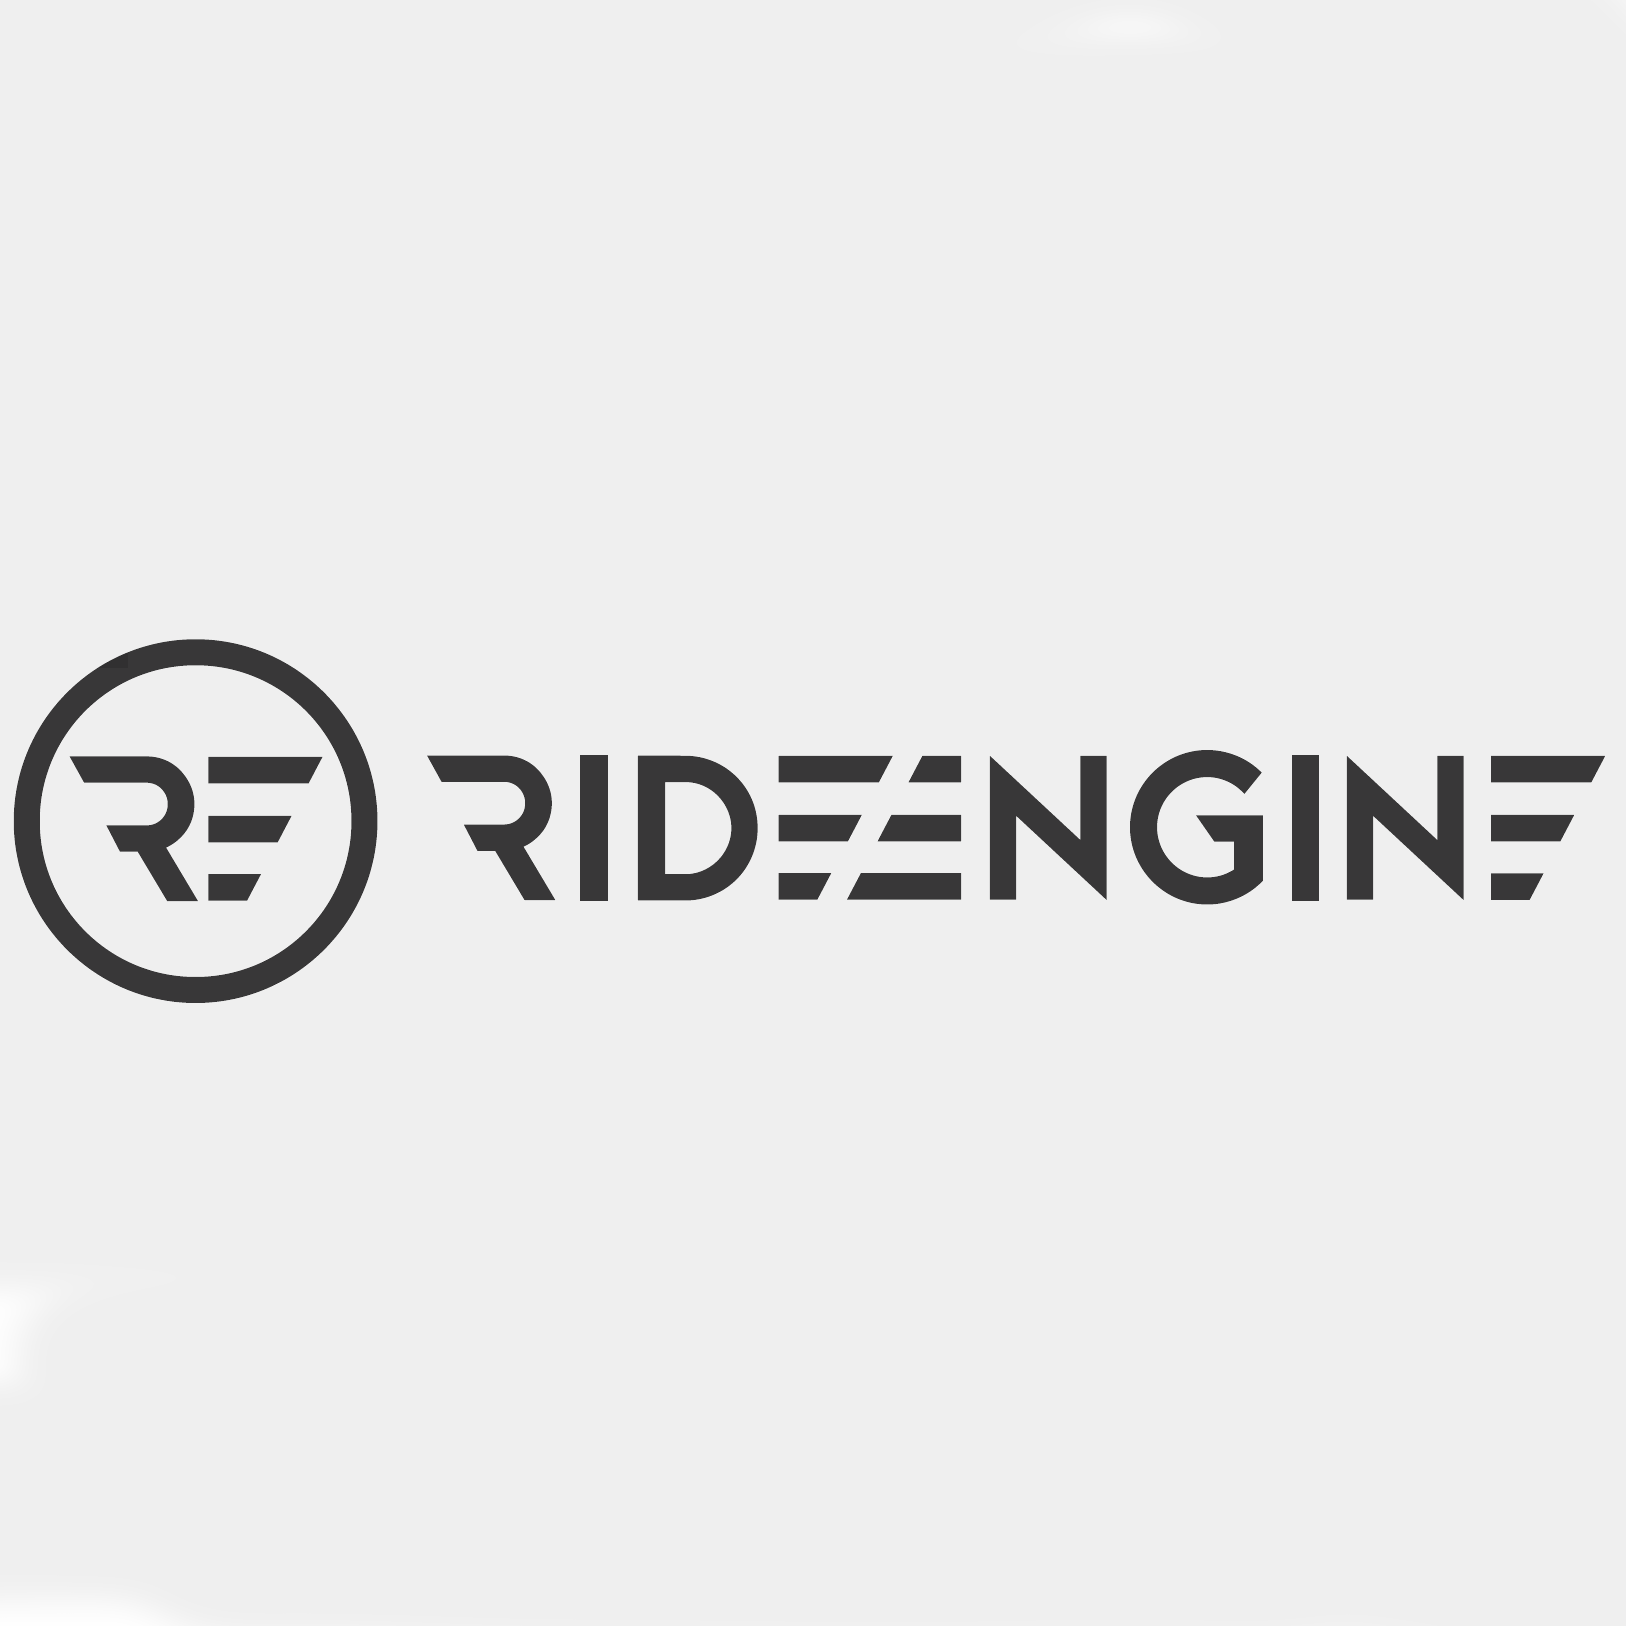 Image for Rideengine